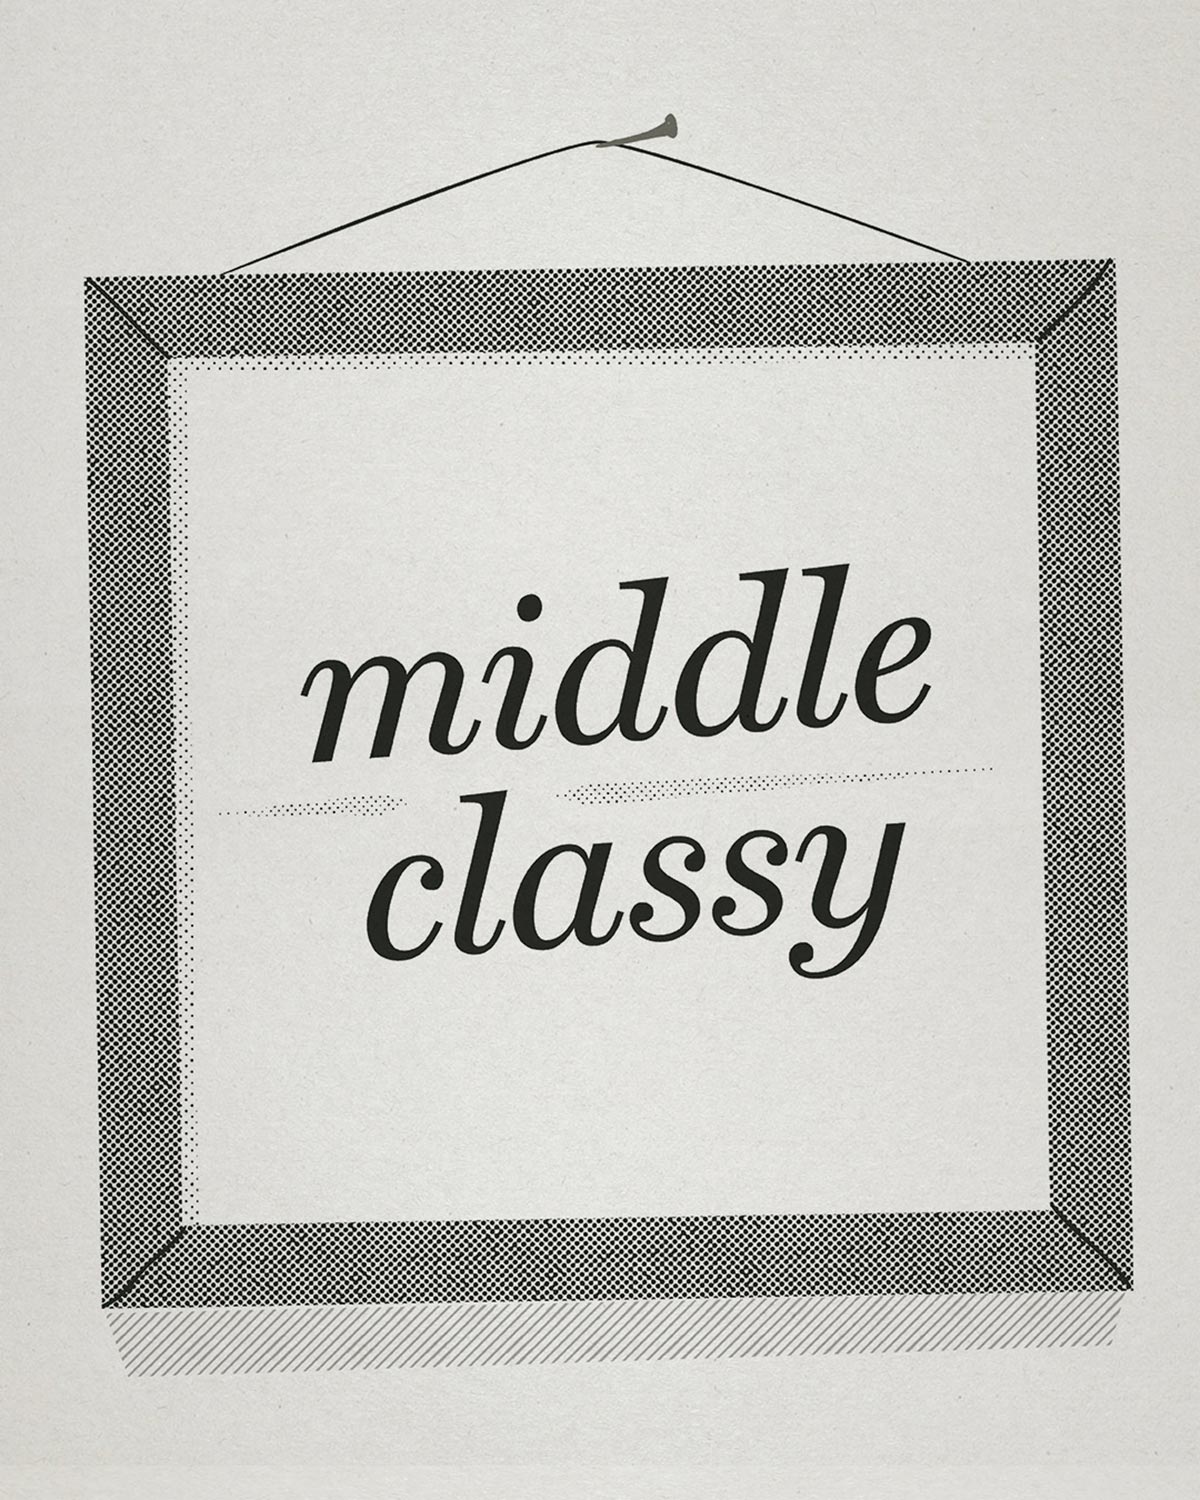 middleclassy